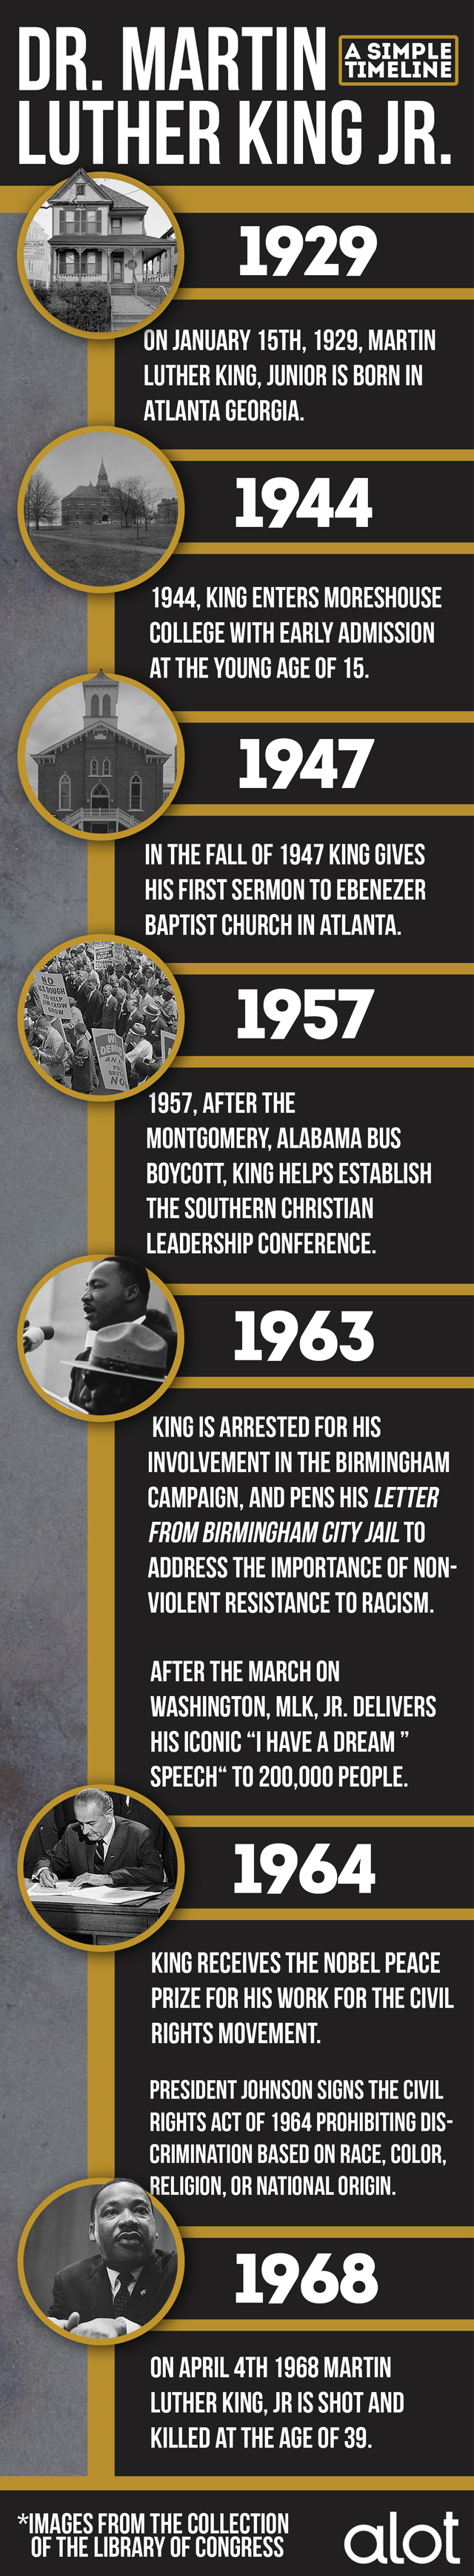 Martin Luther King, Junior: A Timeline